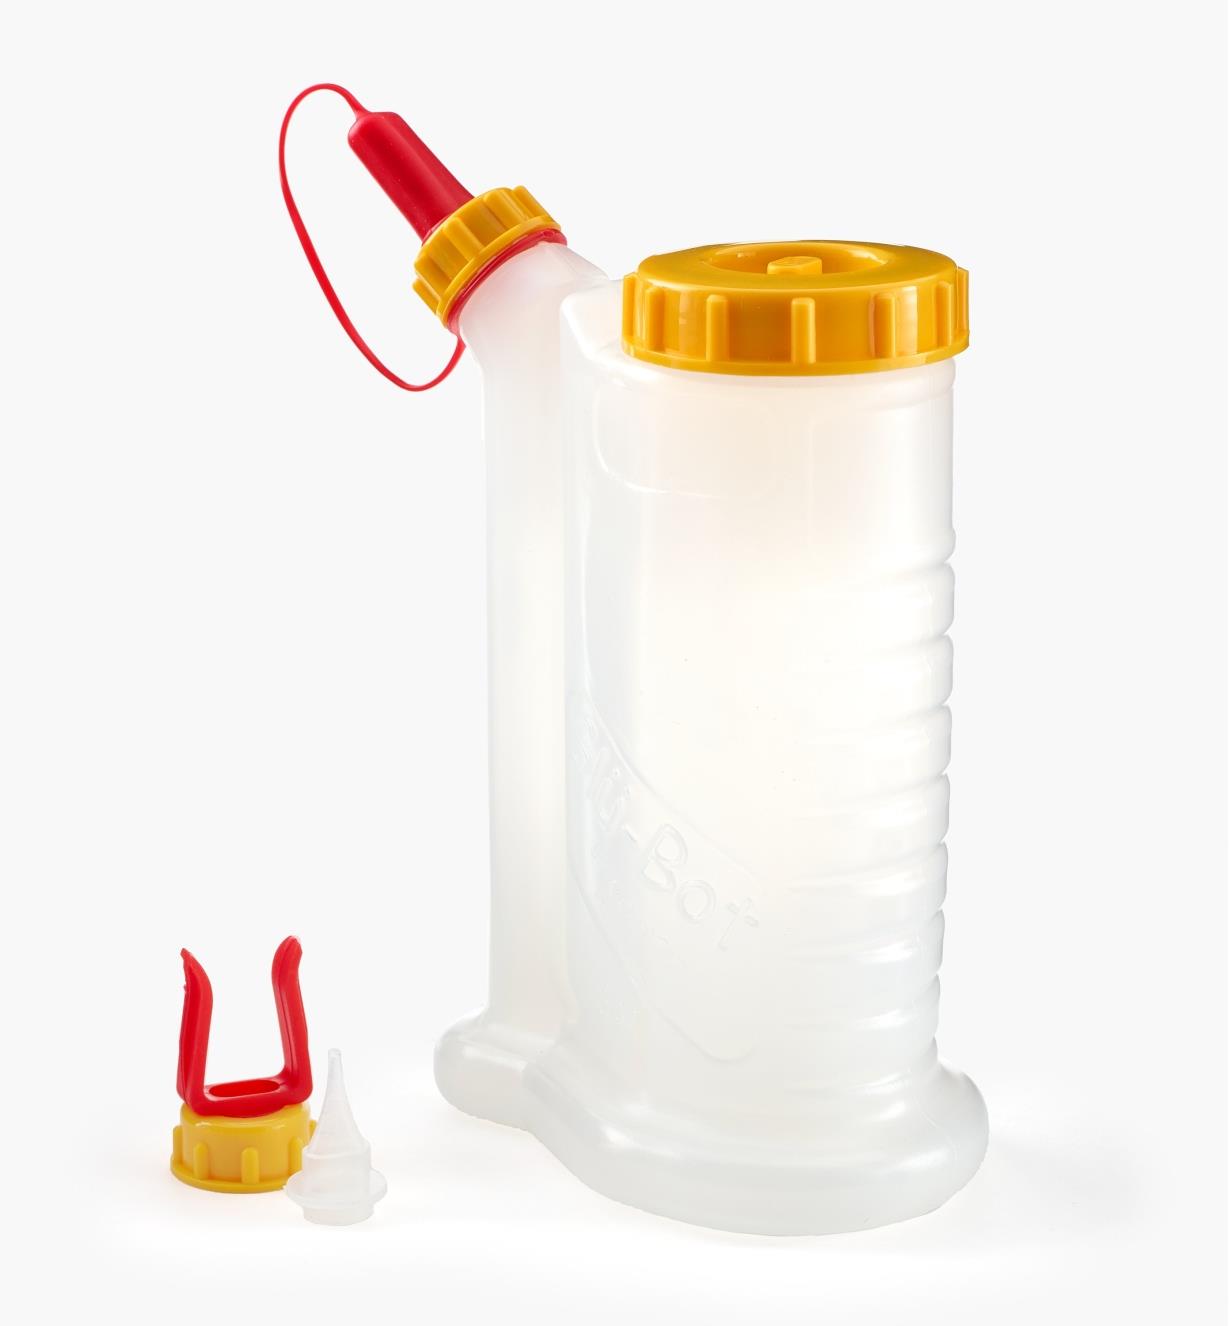 FastCap GlueBot Dripless Glue Bottle Power Tool Services